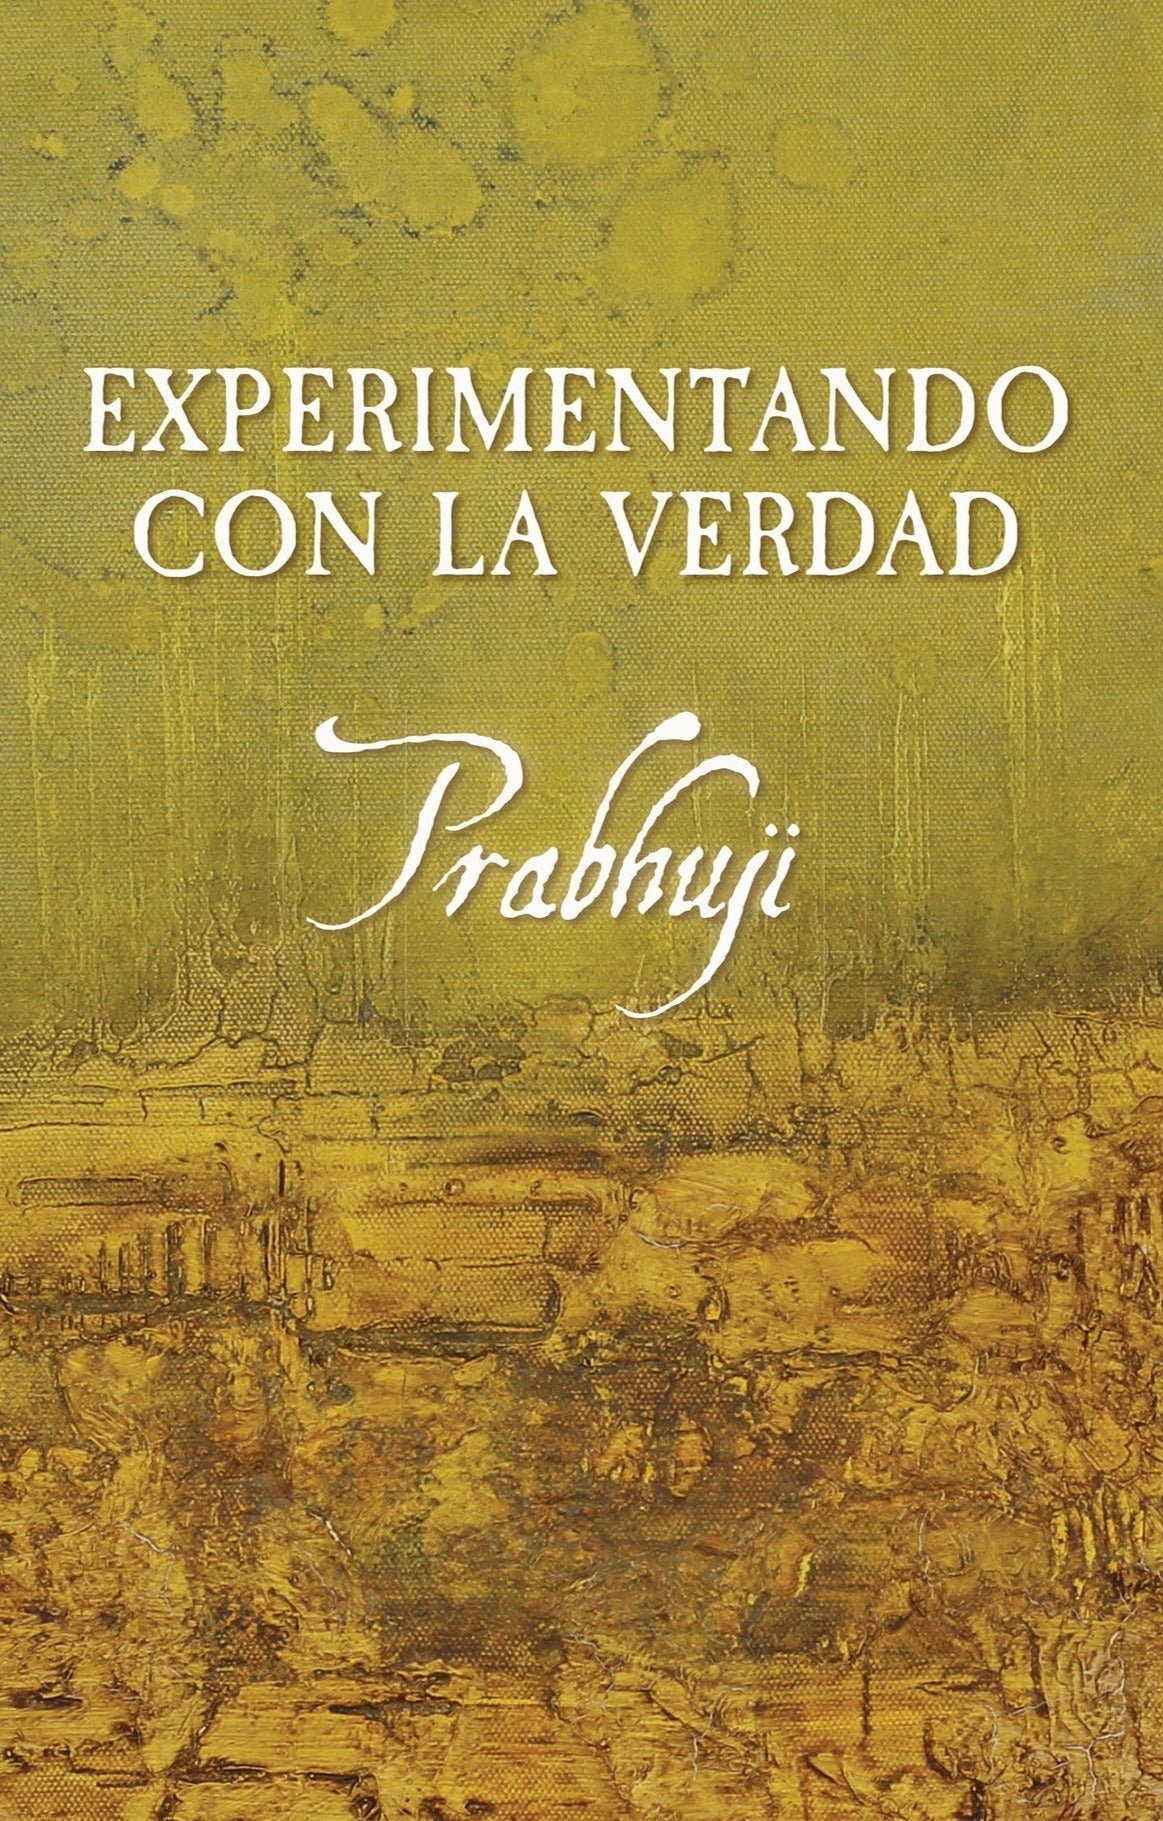 Experimentando con la verdad con Prabhuji (Hard cover - Spanish) - Tree Spirit Wellness